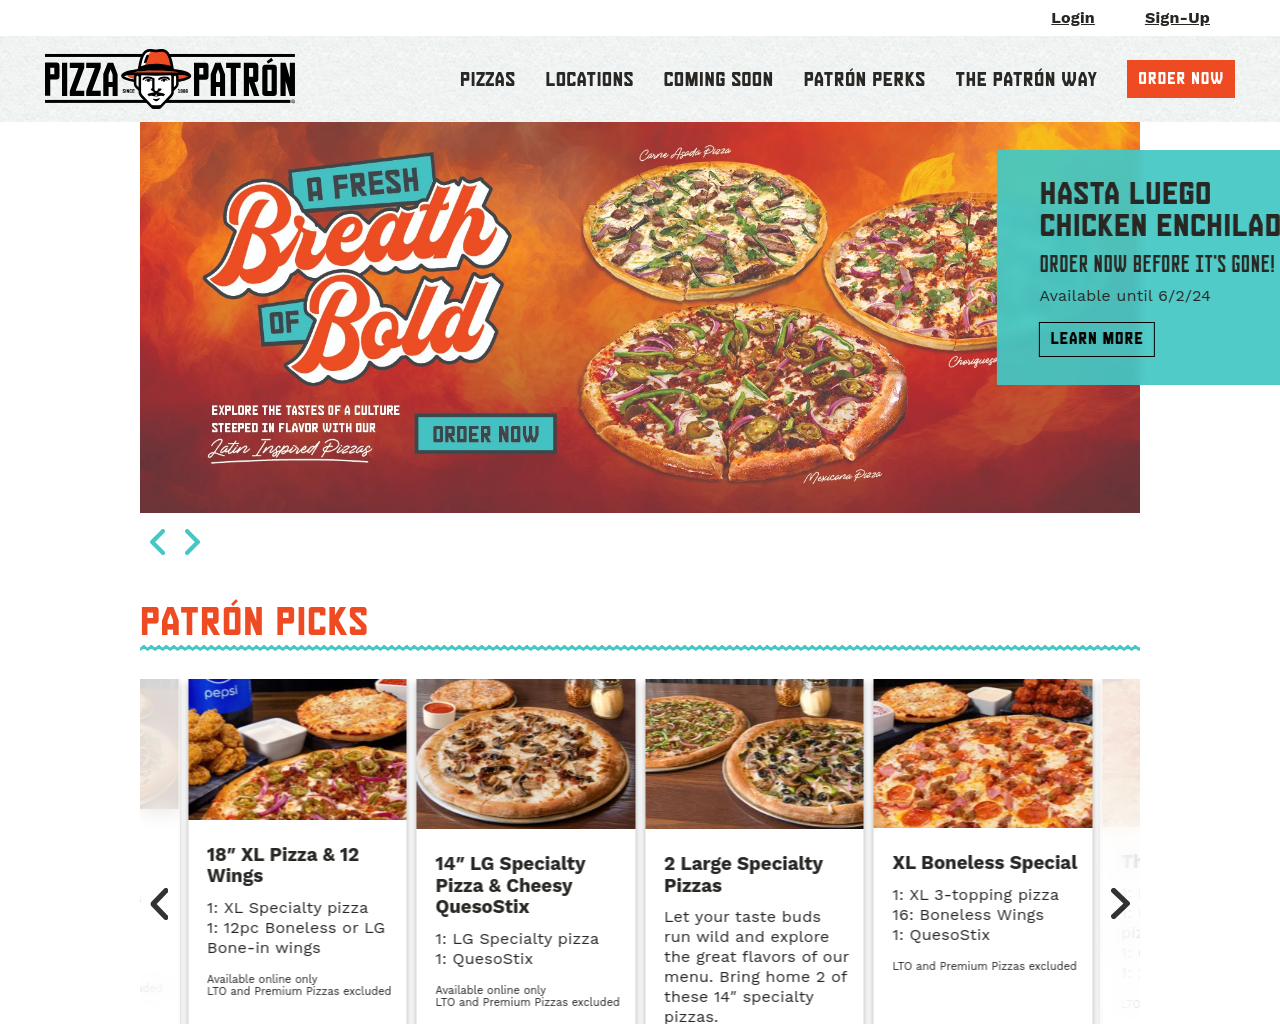 pizzapatron.com